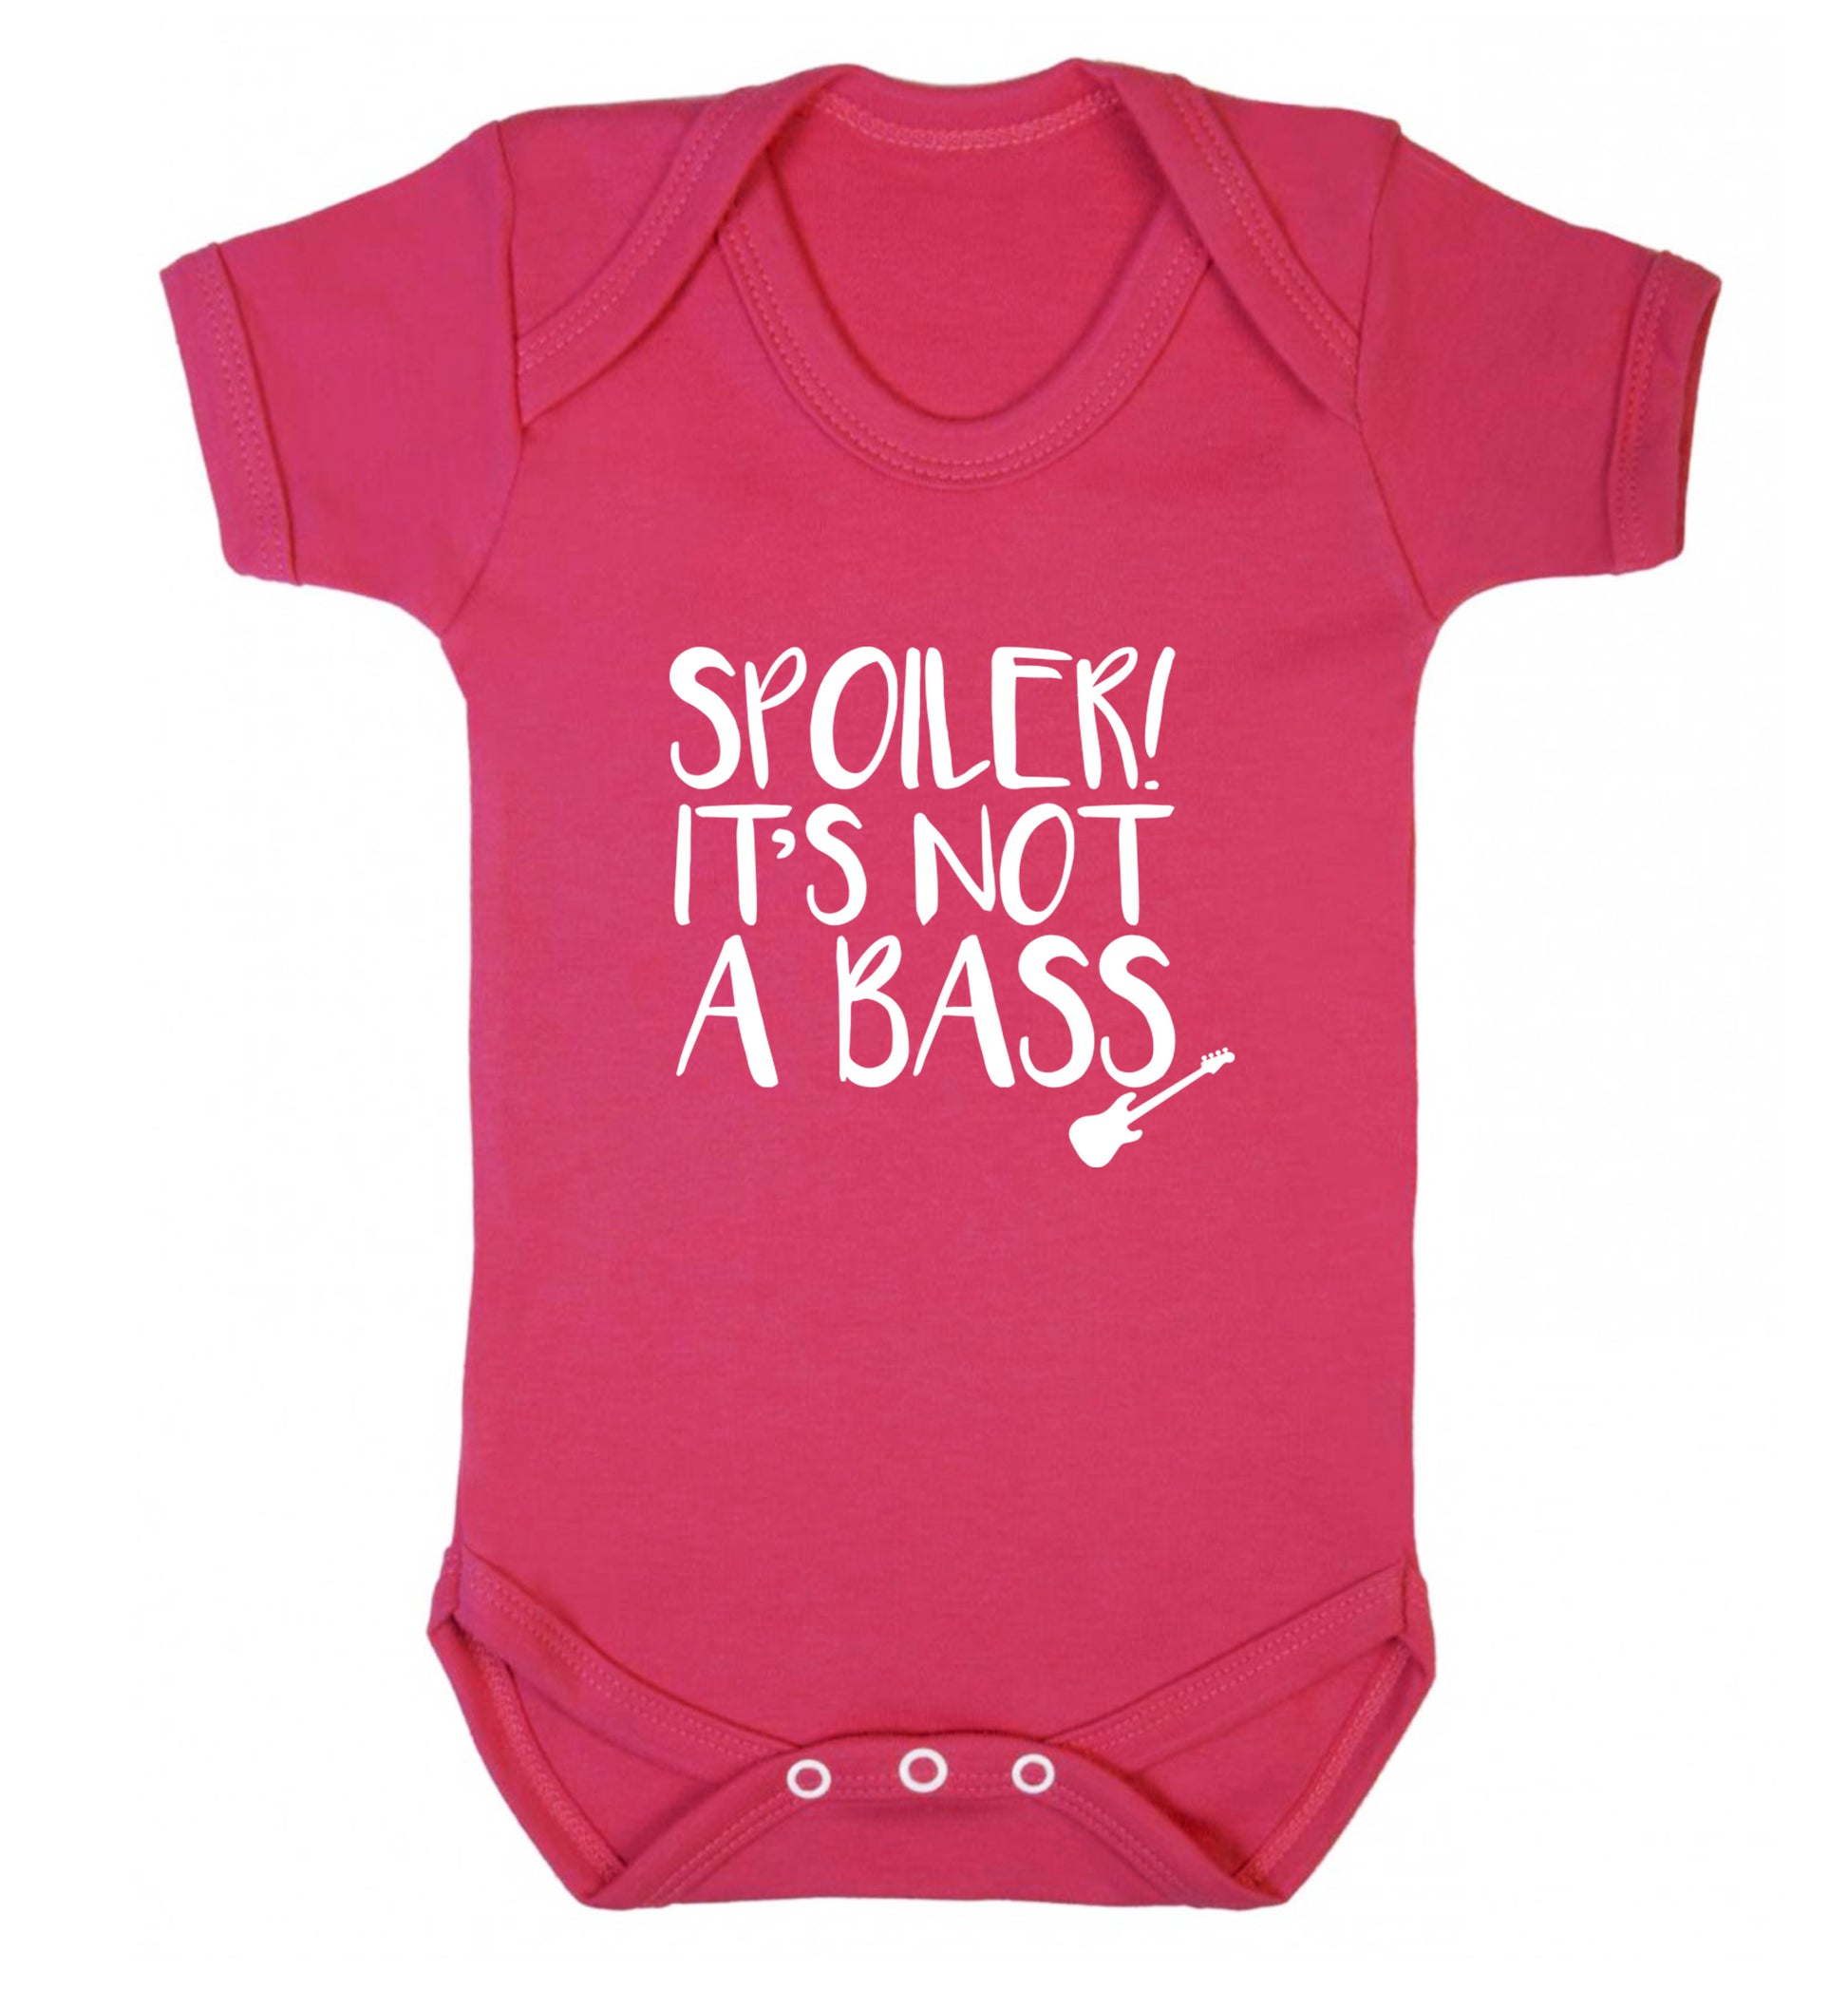 Spoiler it's not a bass Baby Vest dark pink 18-24 months